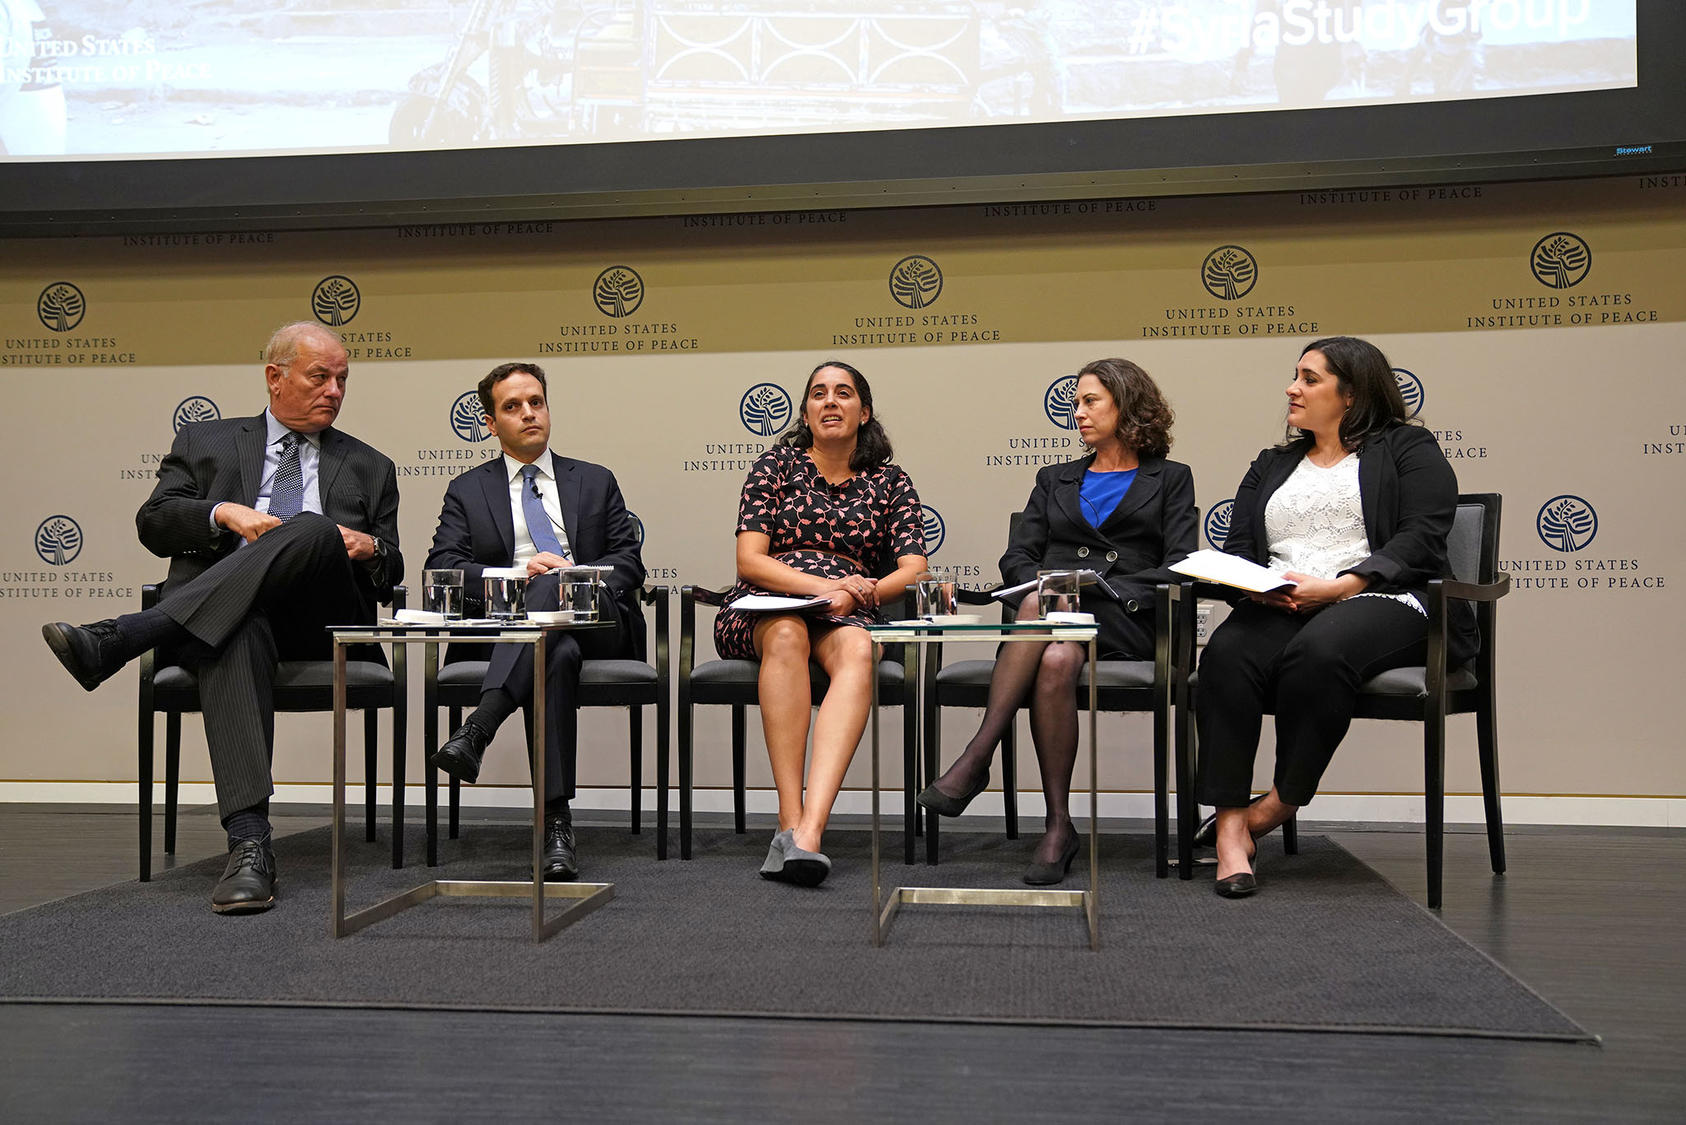 Members of the Syria Study Group discuss the report: From left, Ambassador Fred Hof, Vance Serchuk, Melissa Dalton, Kimberly Kagan, Dana Stroul.